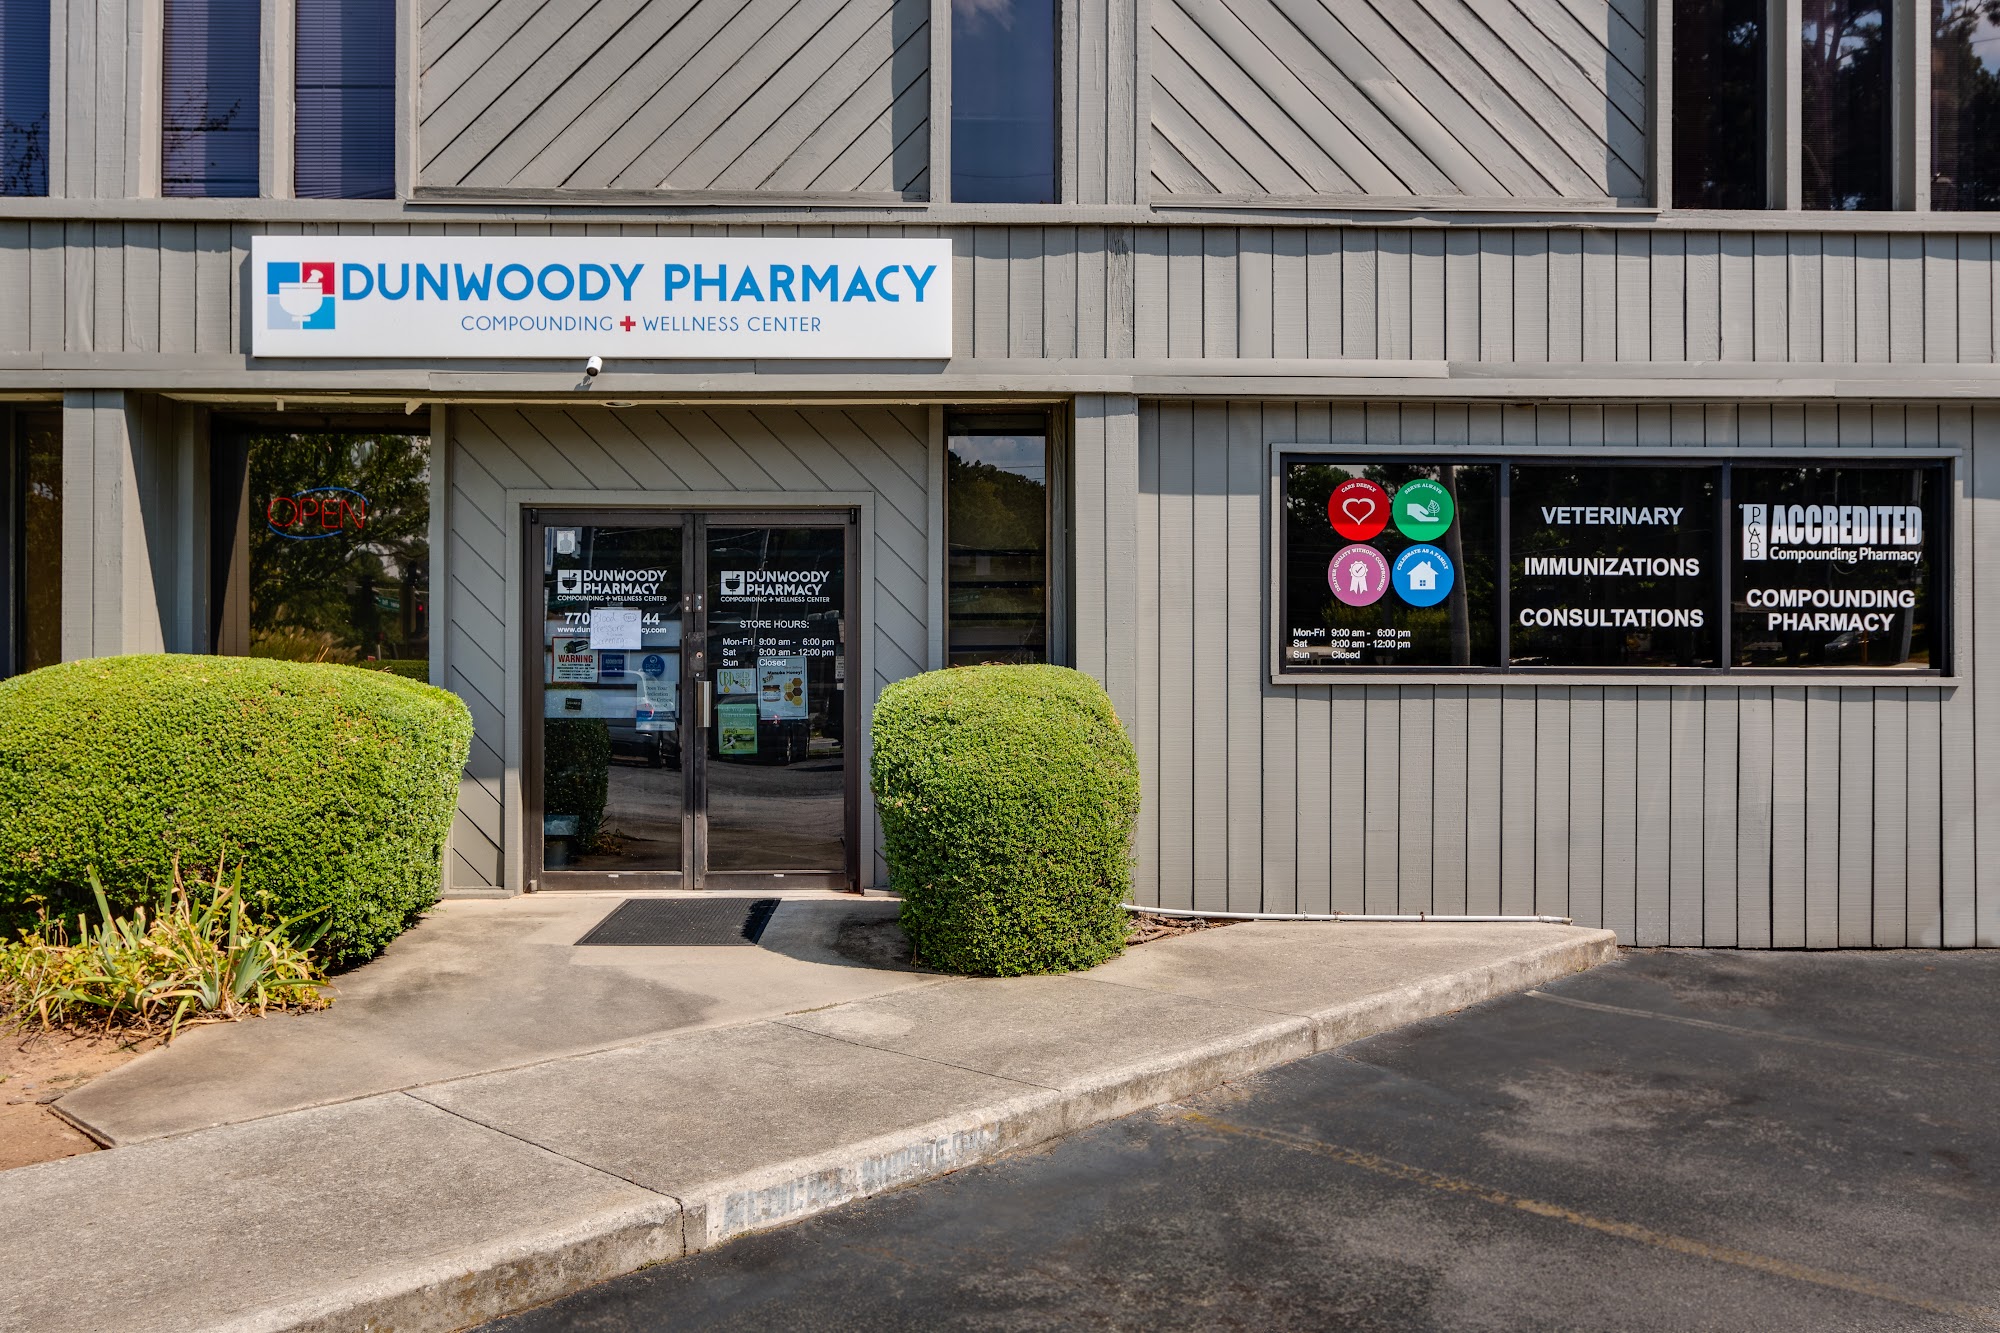 Dunwoody Pharmacy, Compounding & Wellness